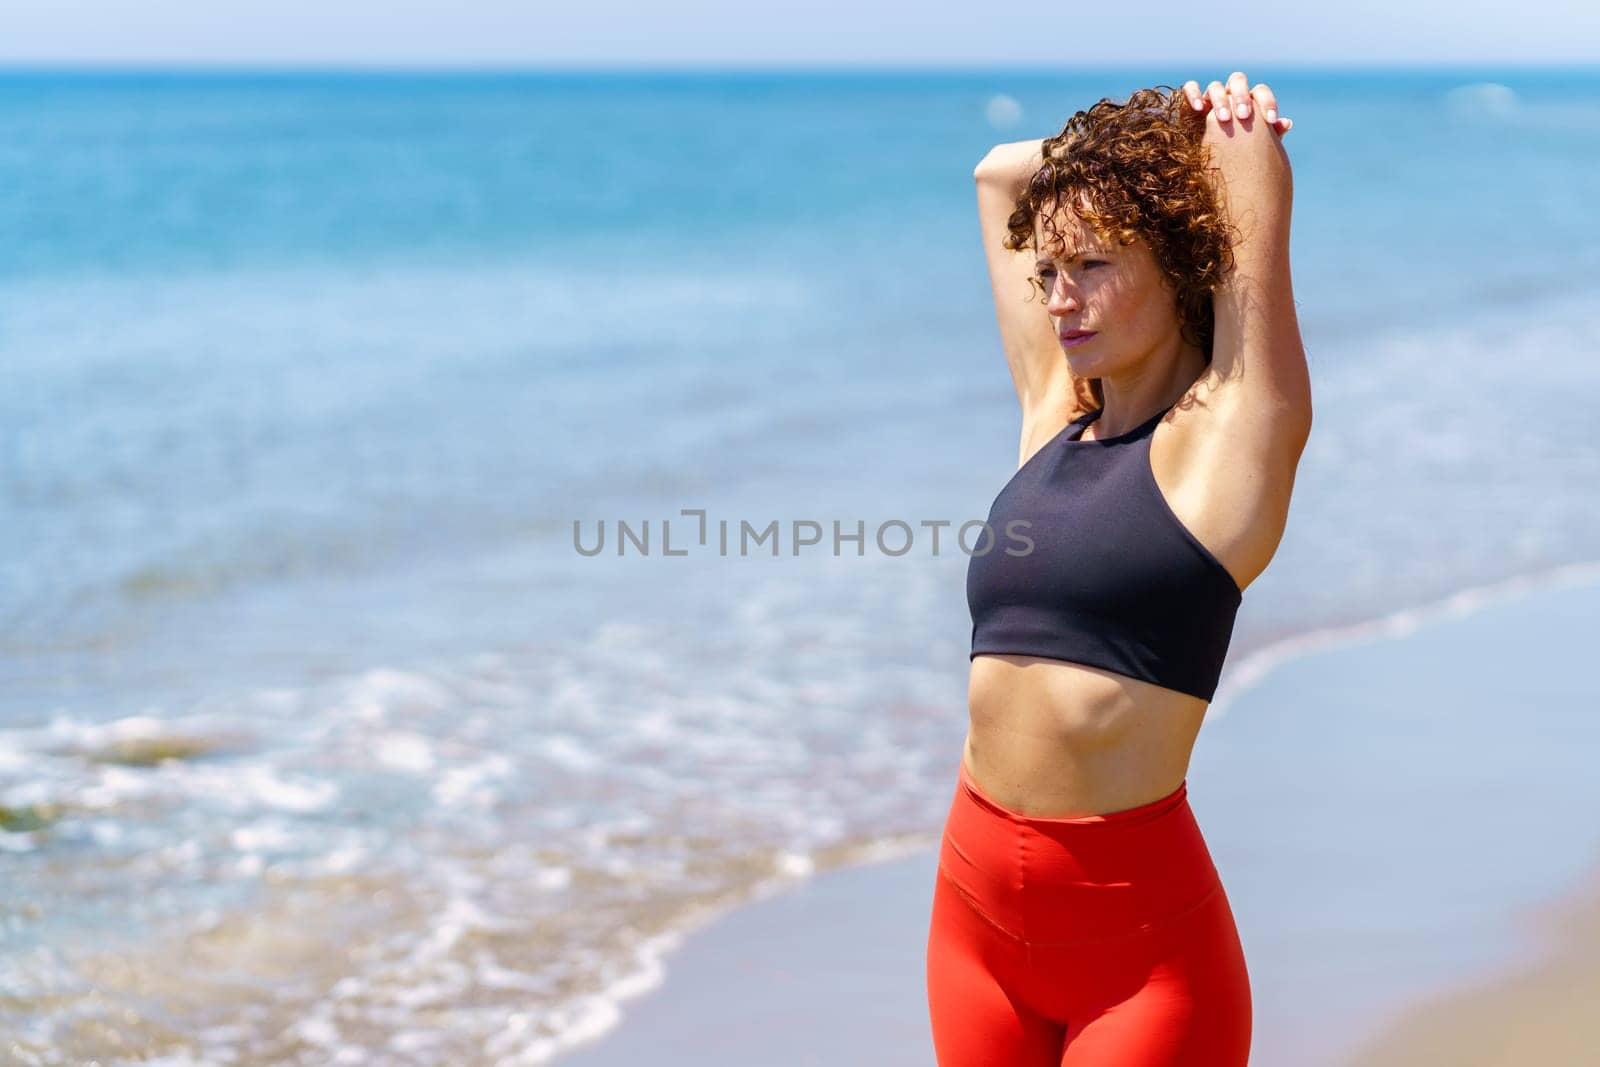 Pensive woman stretching on seashore by javiindy